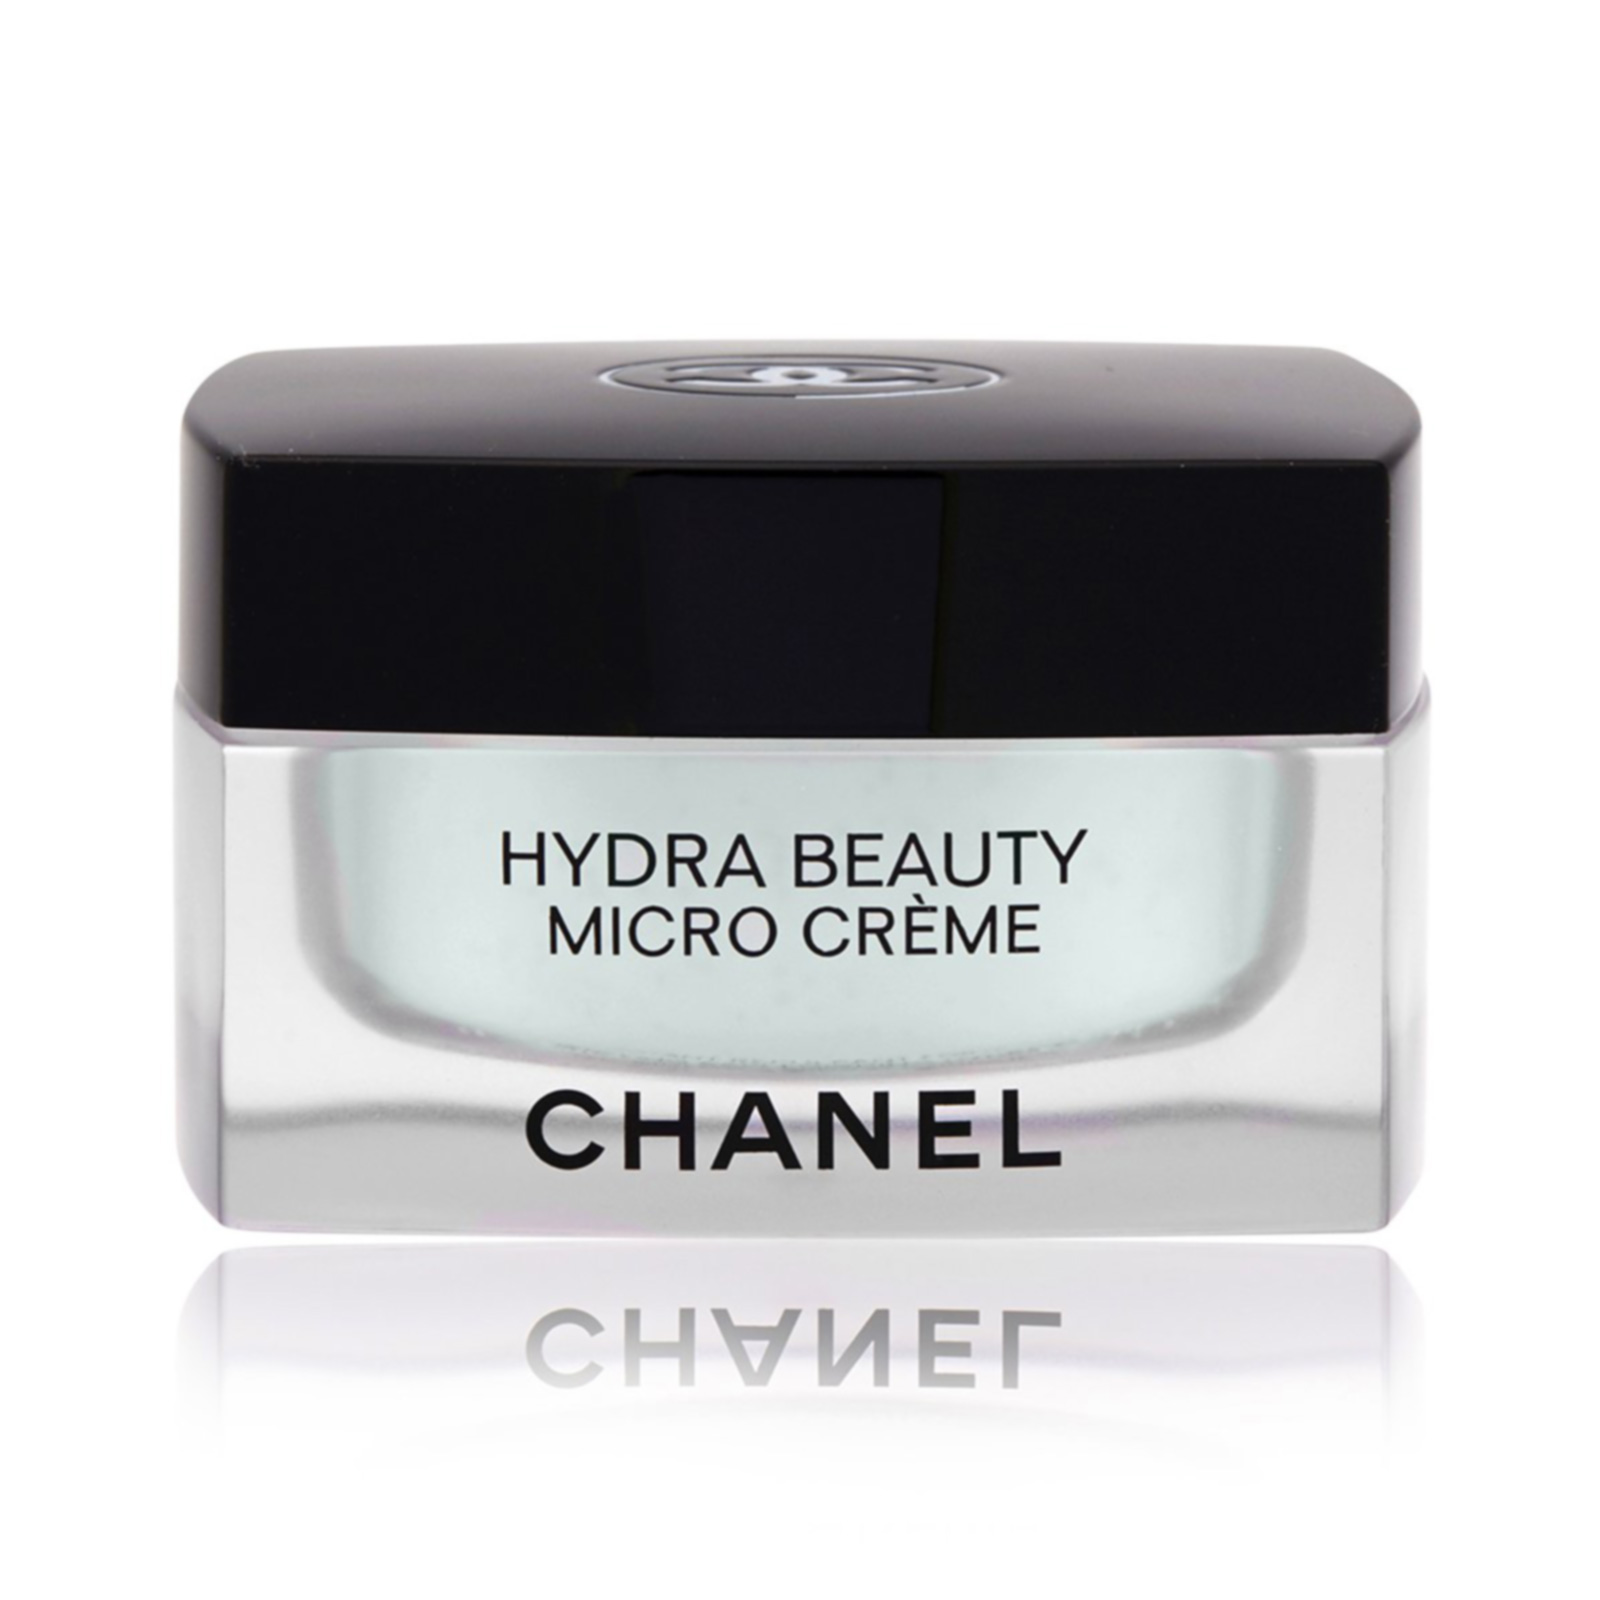 hydra beauty cream chanel